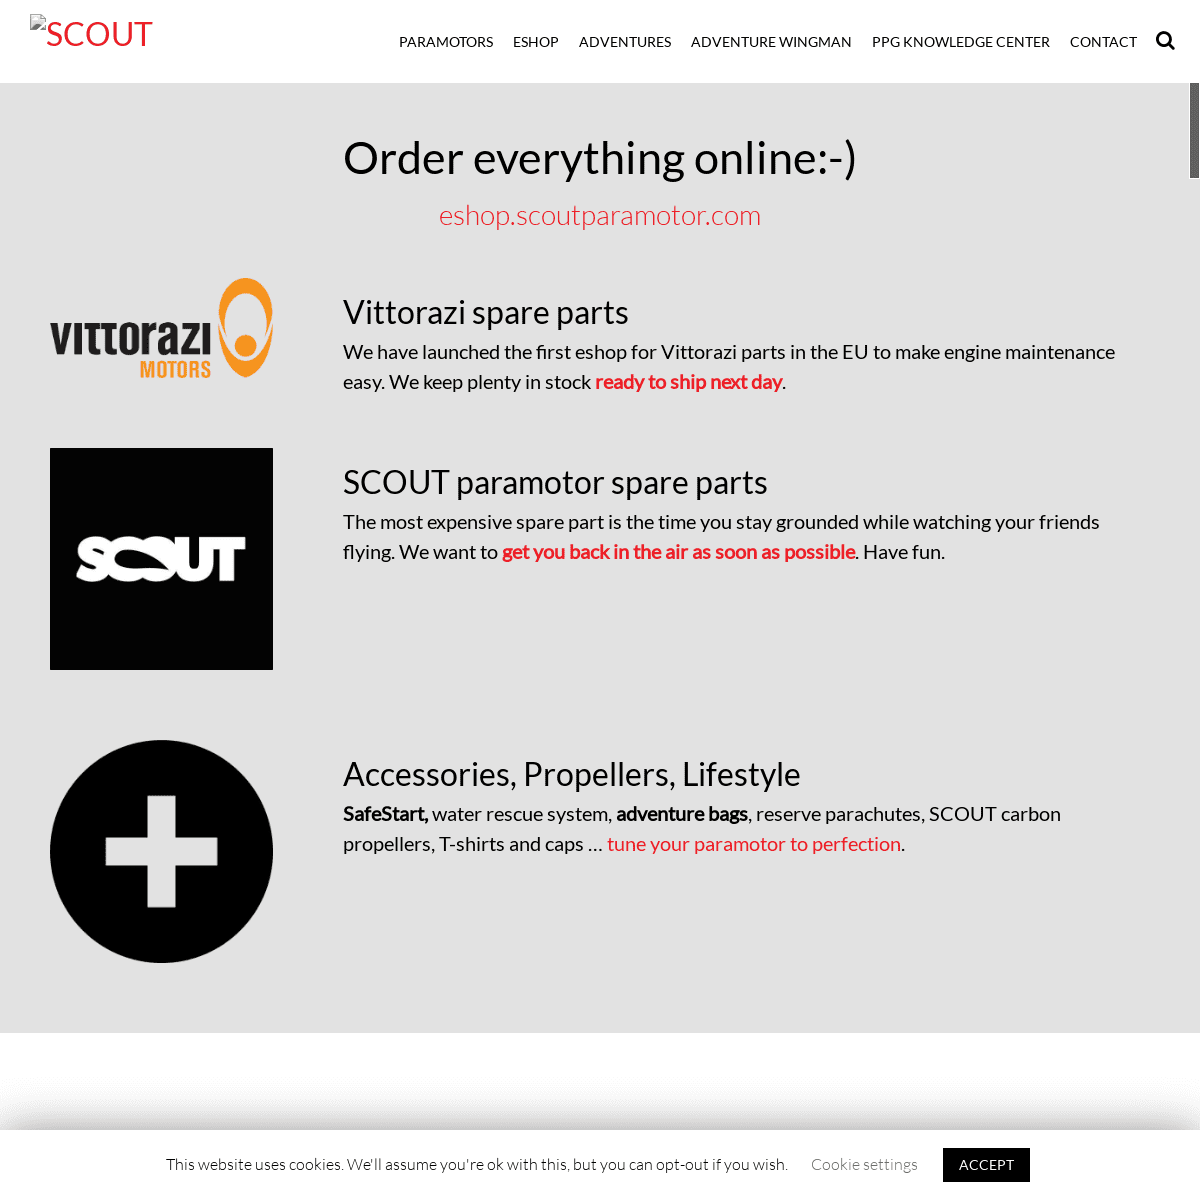 A complete backup of scoutparamotor.com